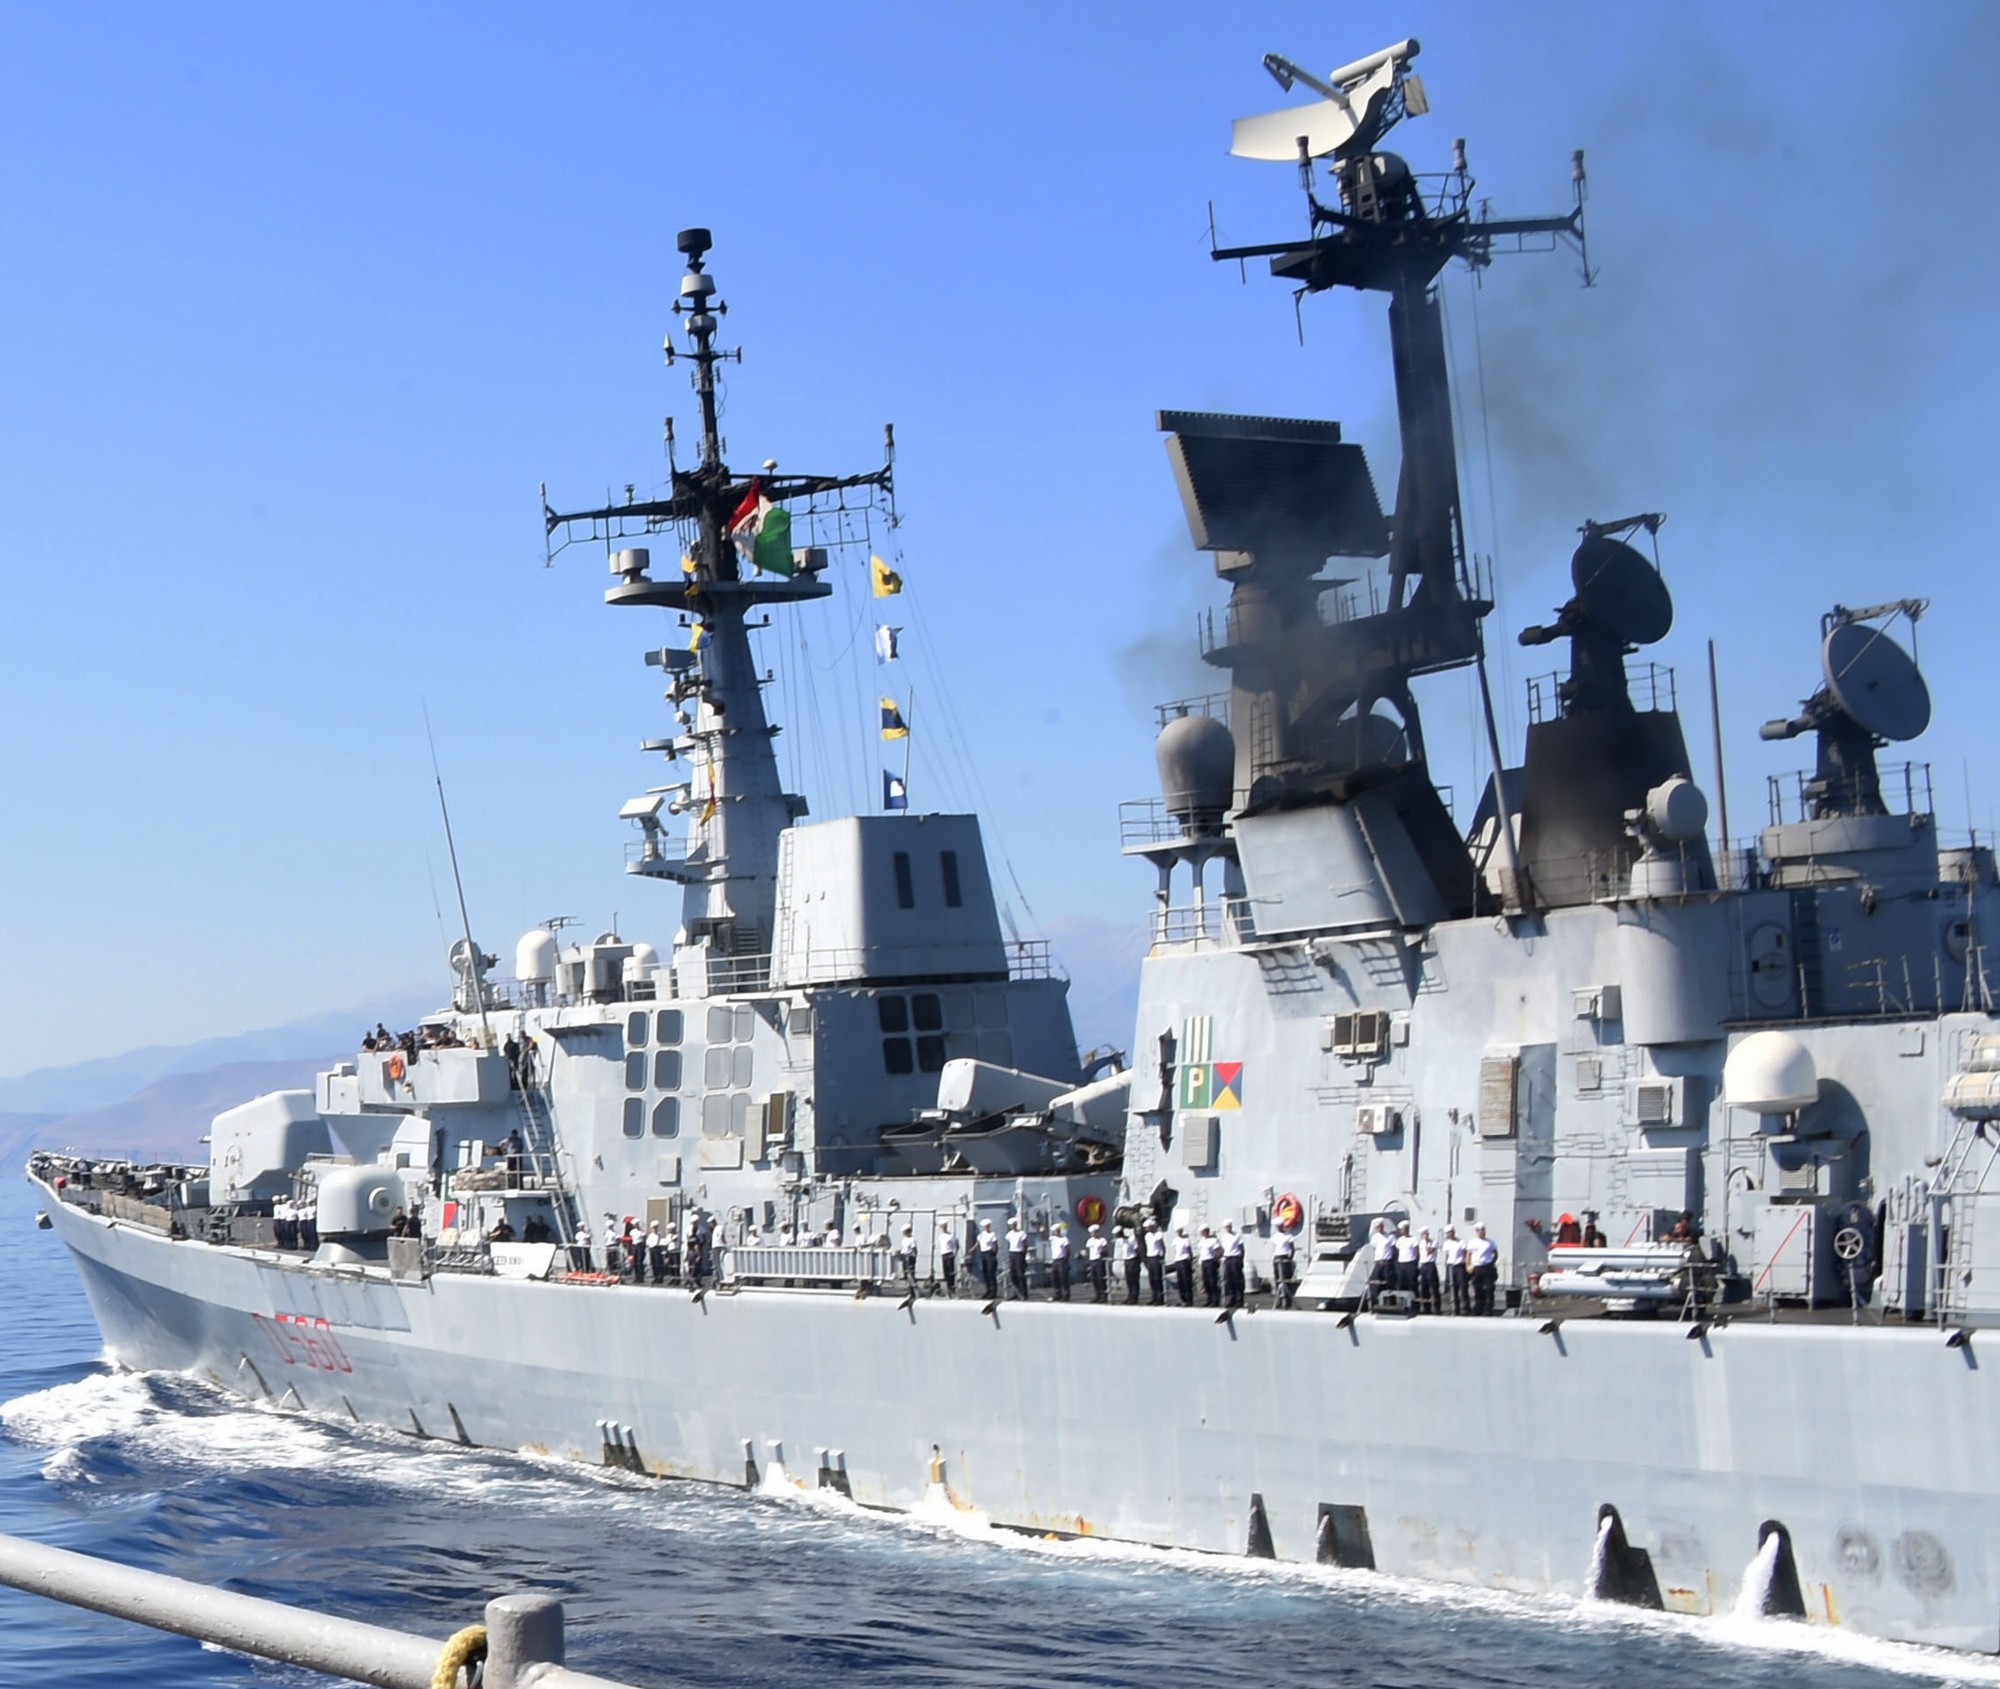 d-560 luigi durand de la penne its nave guided missile destroyer ddg italian navy marina militare 05